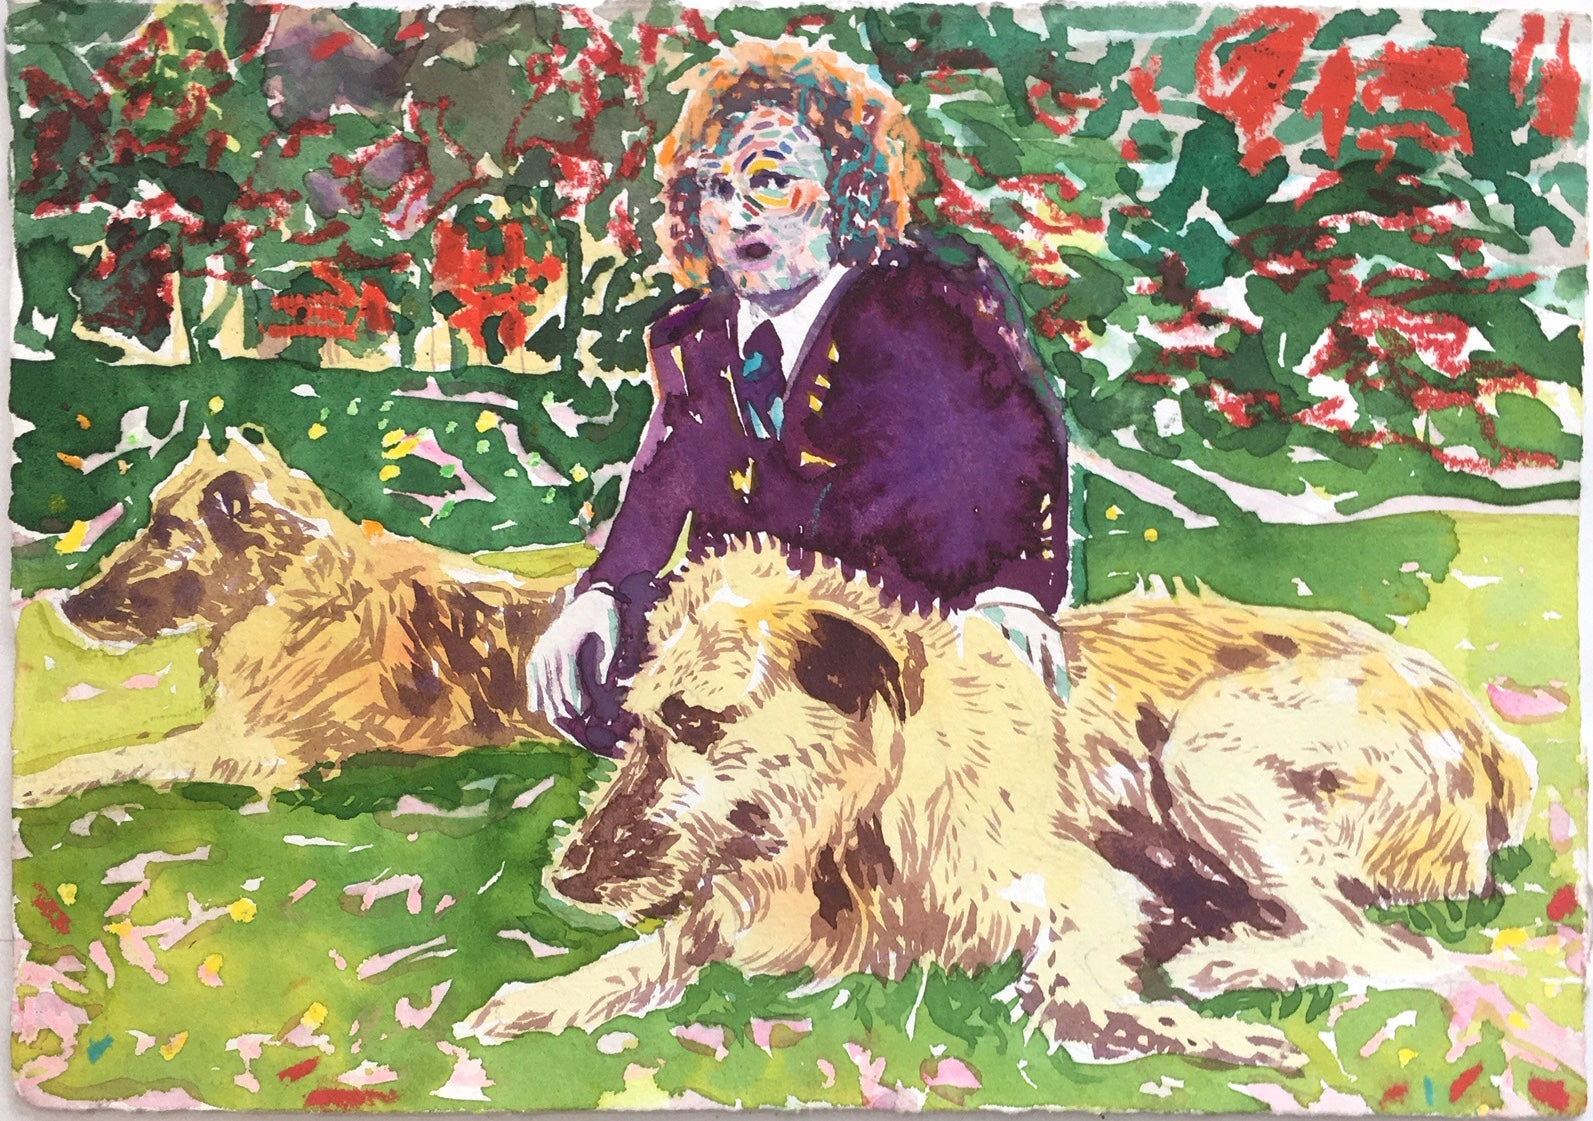 Dominic Shepherd 'The Howl', 2020 Watercolour, soft pastel, oil pastel on paper 21x30cm